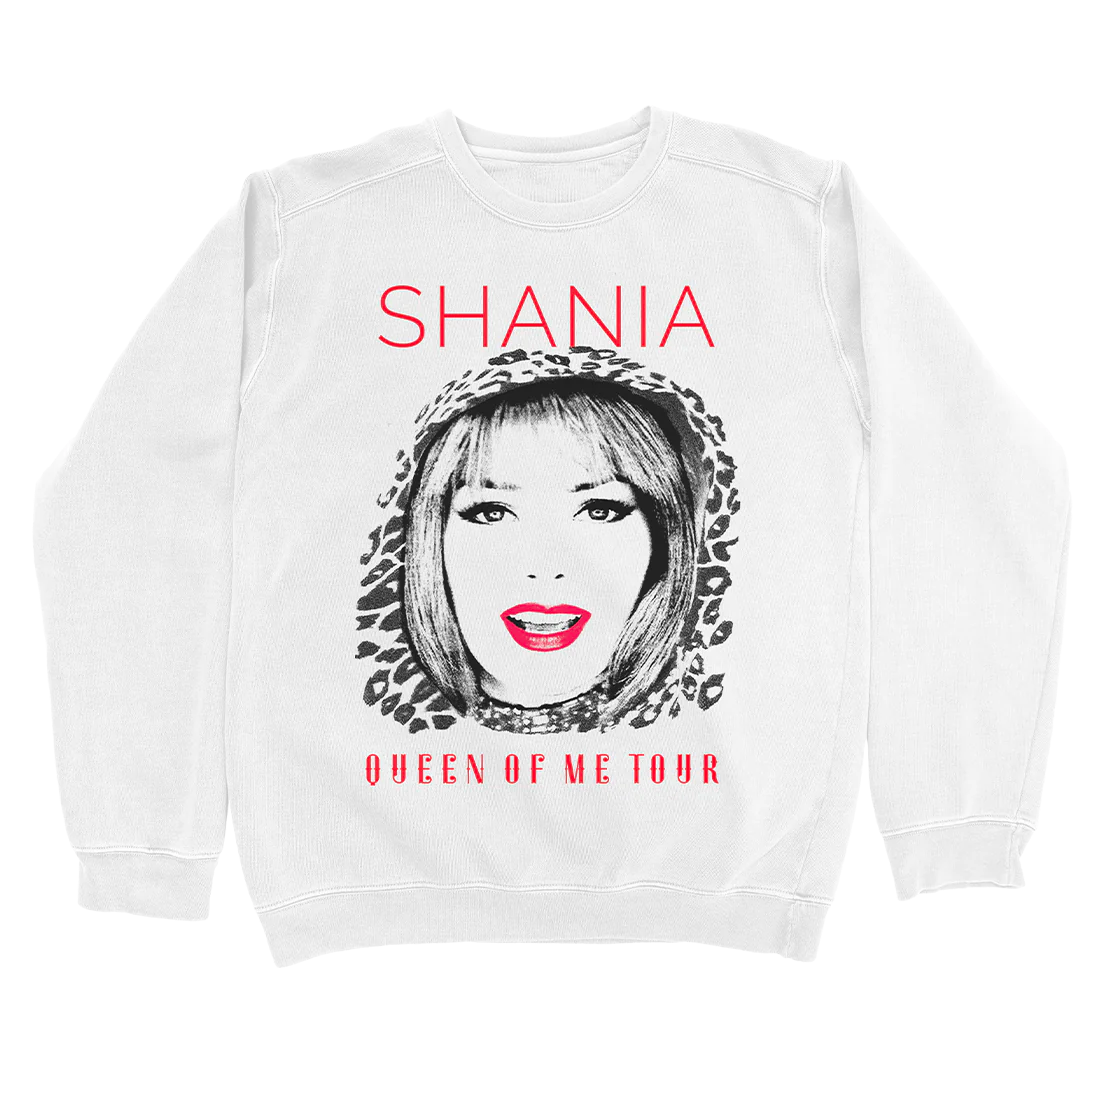 Shania Twain - Queen of Me Tour Dateback Crewneck